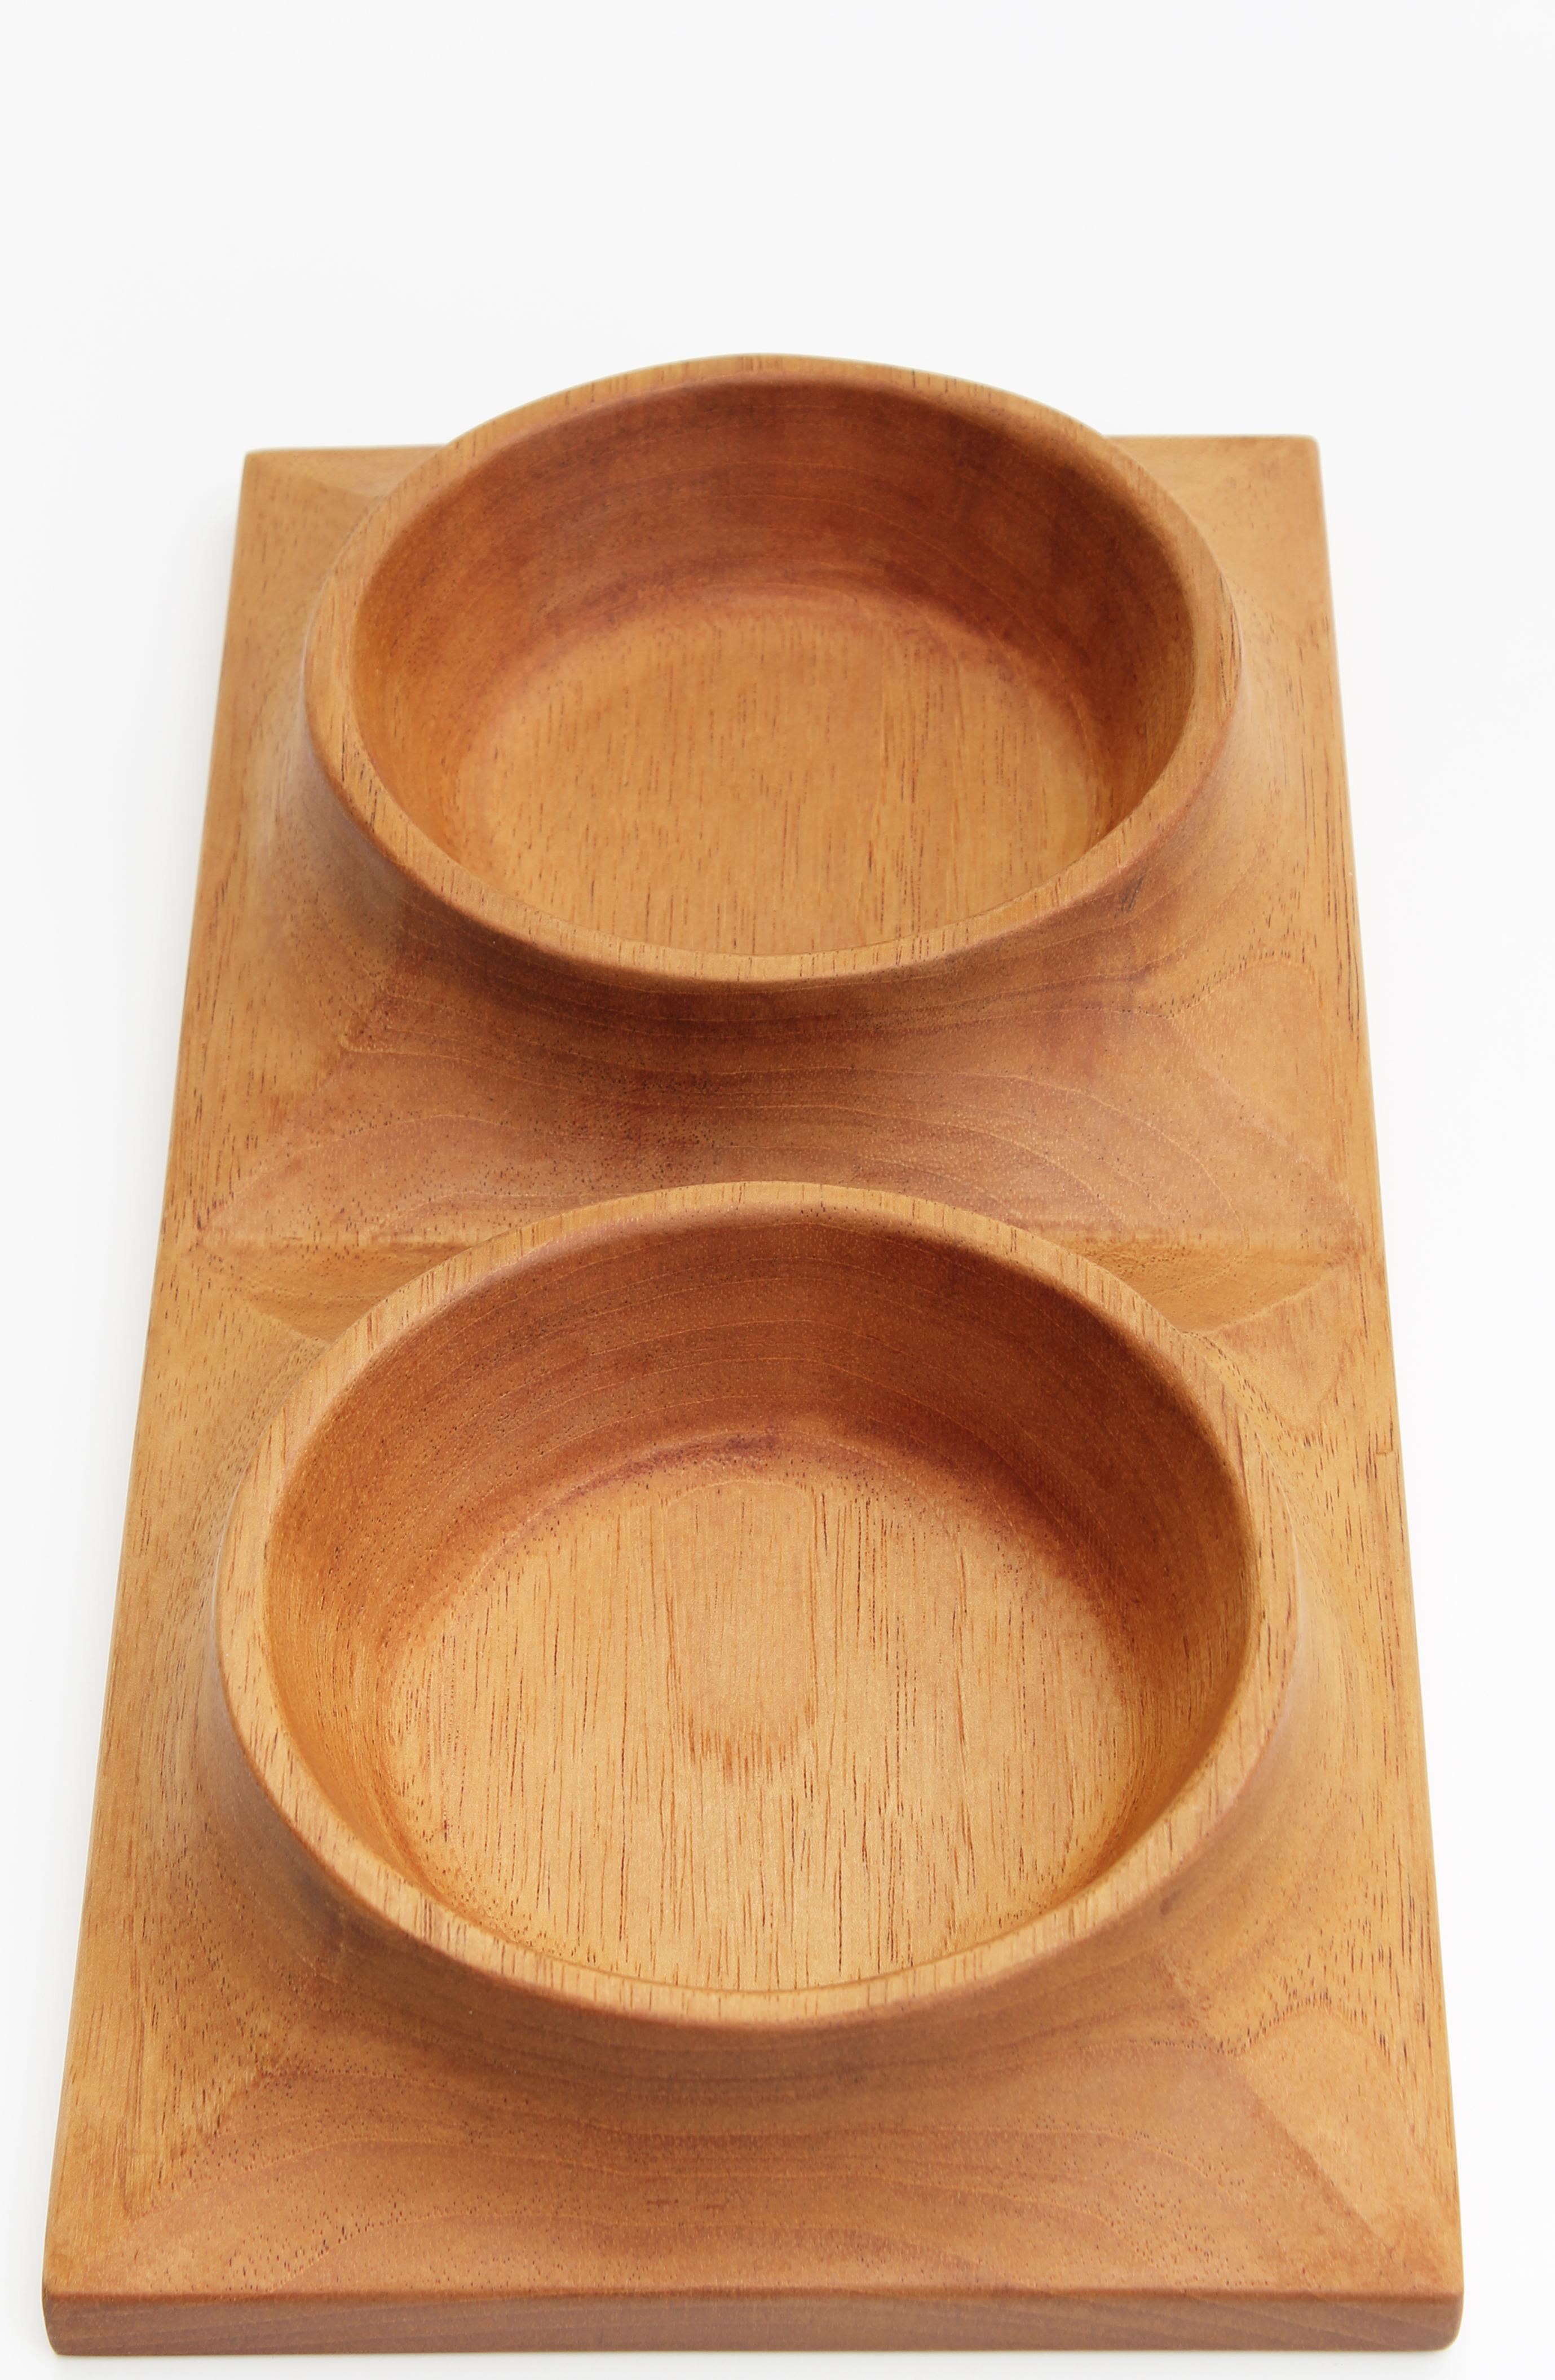 Wood Dórico wood centerpiece - little size (pink cedar wood) For Sale